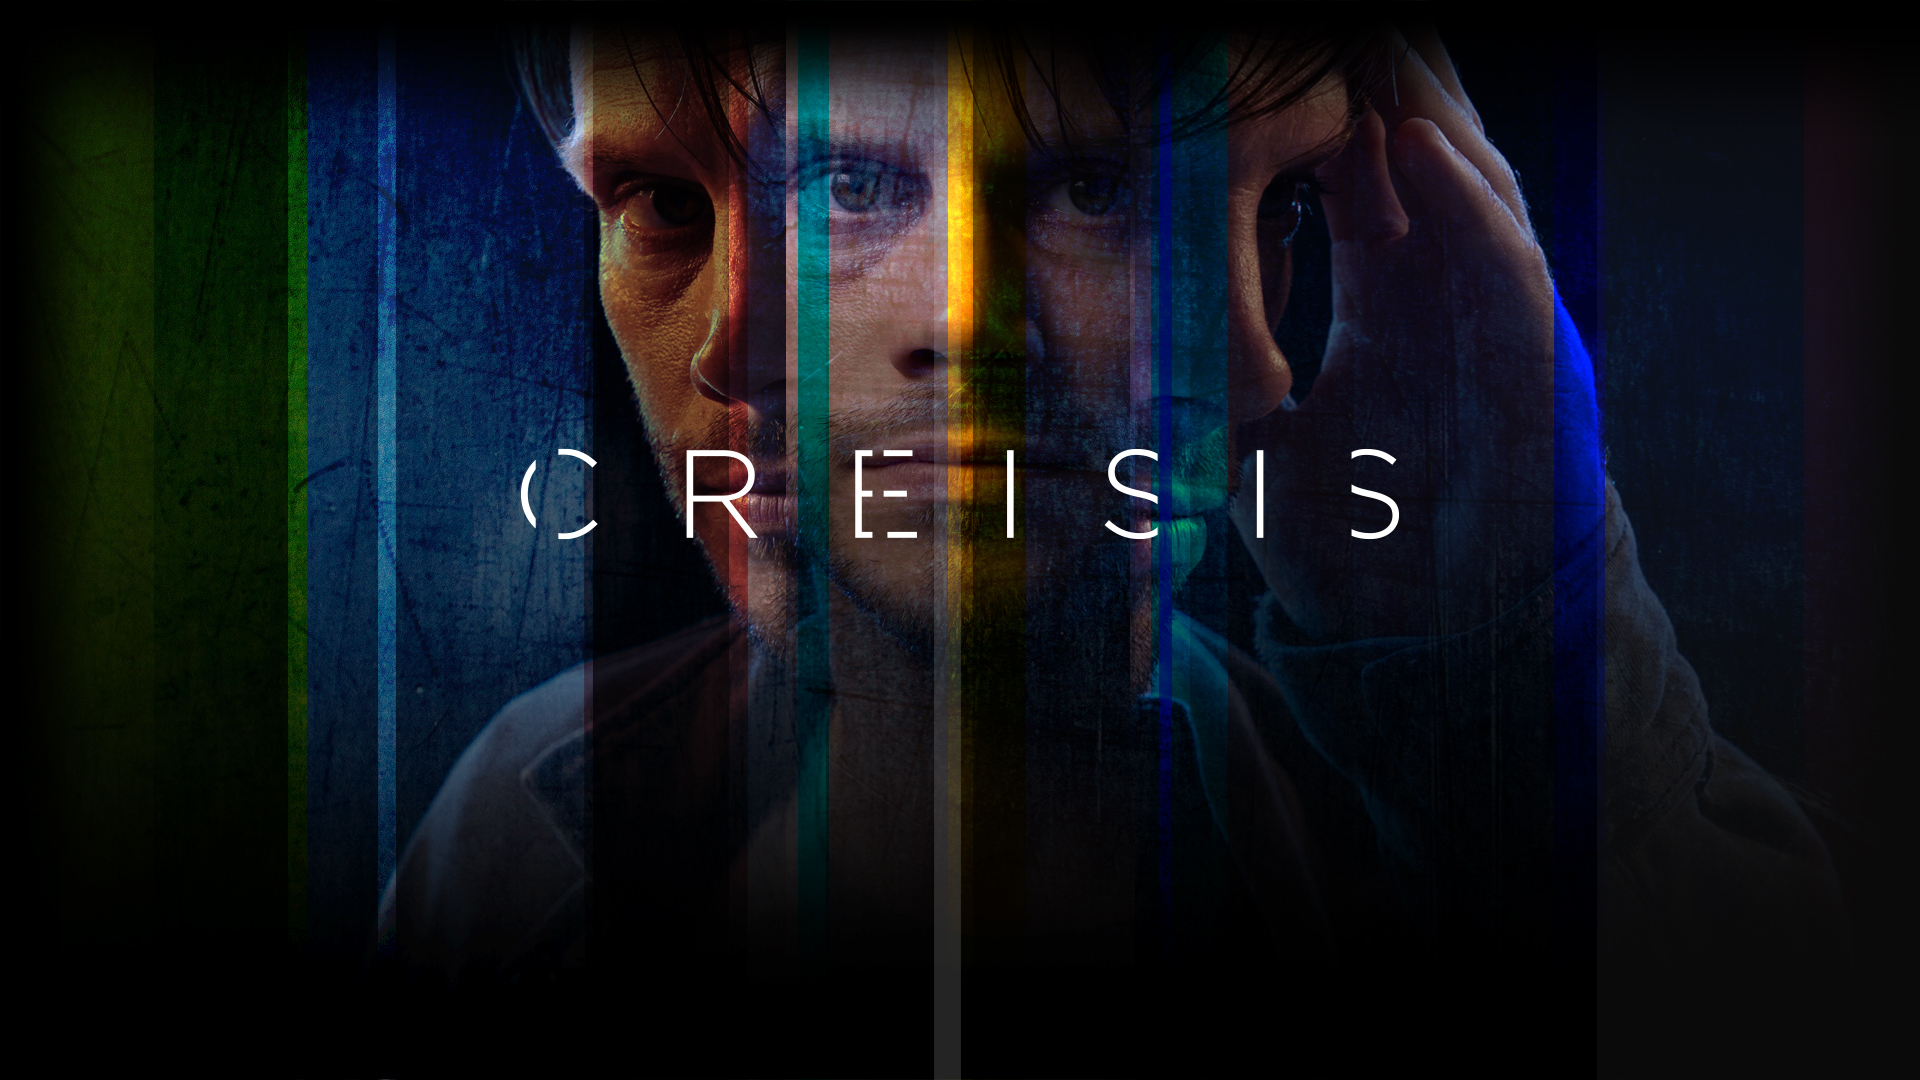 New series: Creisis